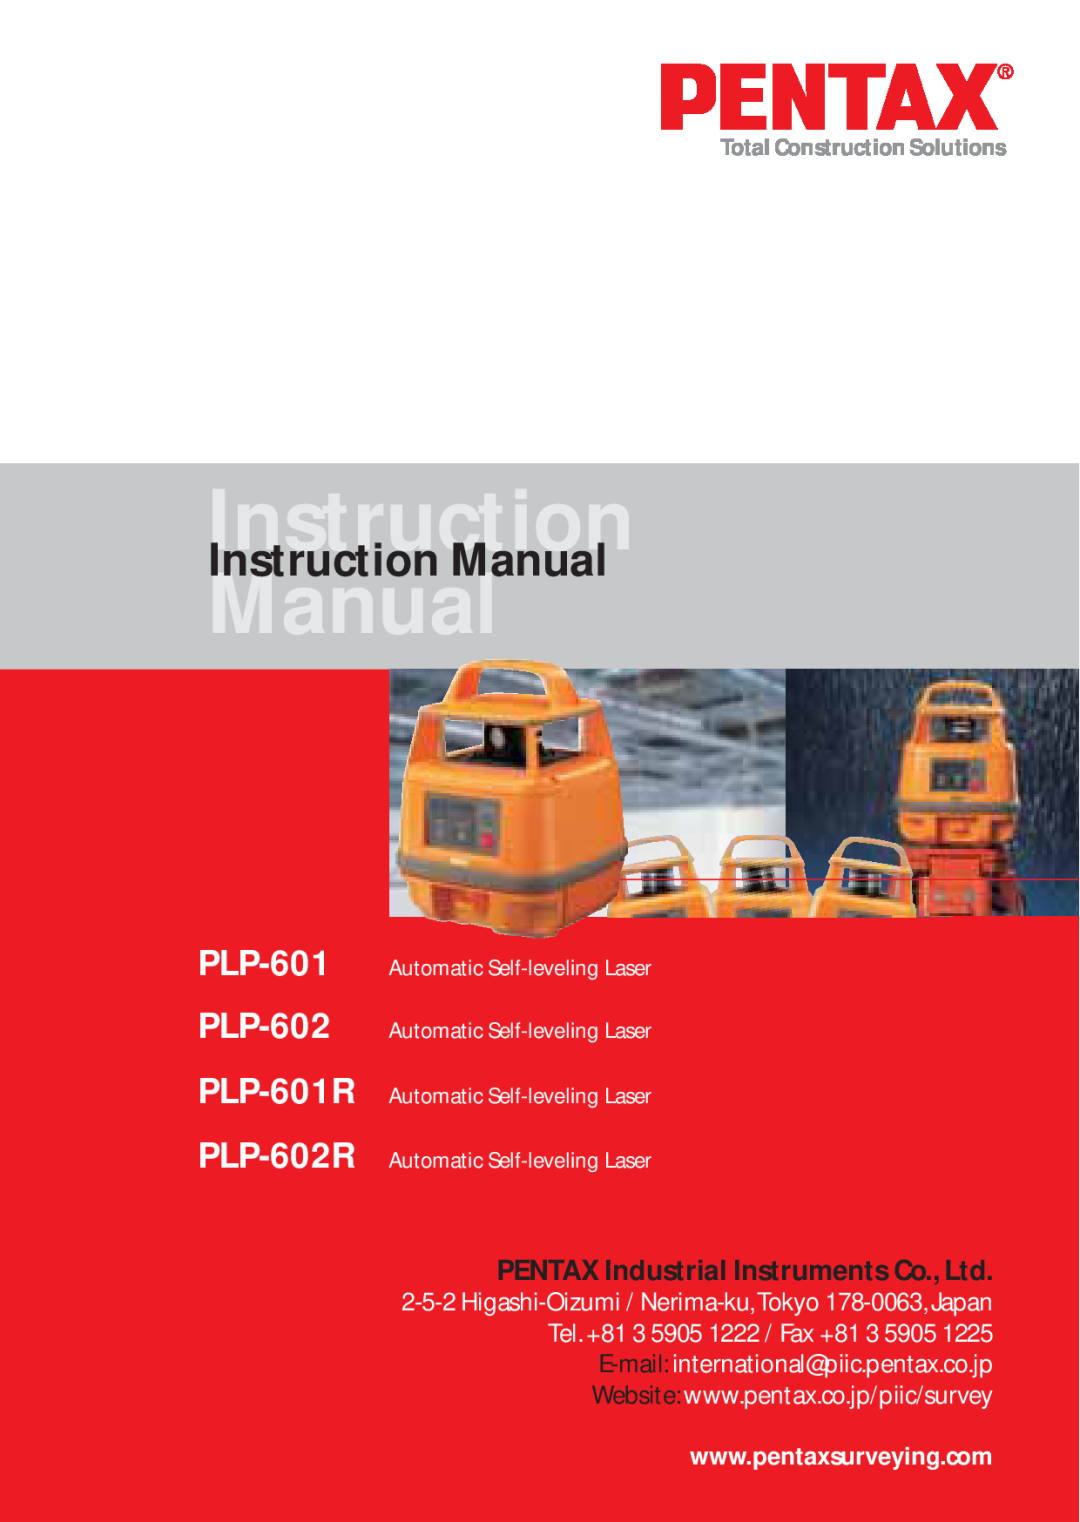 Pentax instruction manual Instruction Manual, PLP-601 PLP-602 PLP-601R PLP-602R, Total Construction Solutions 